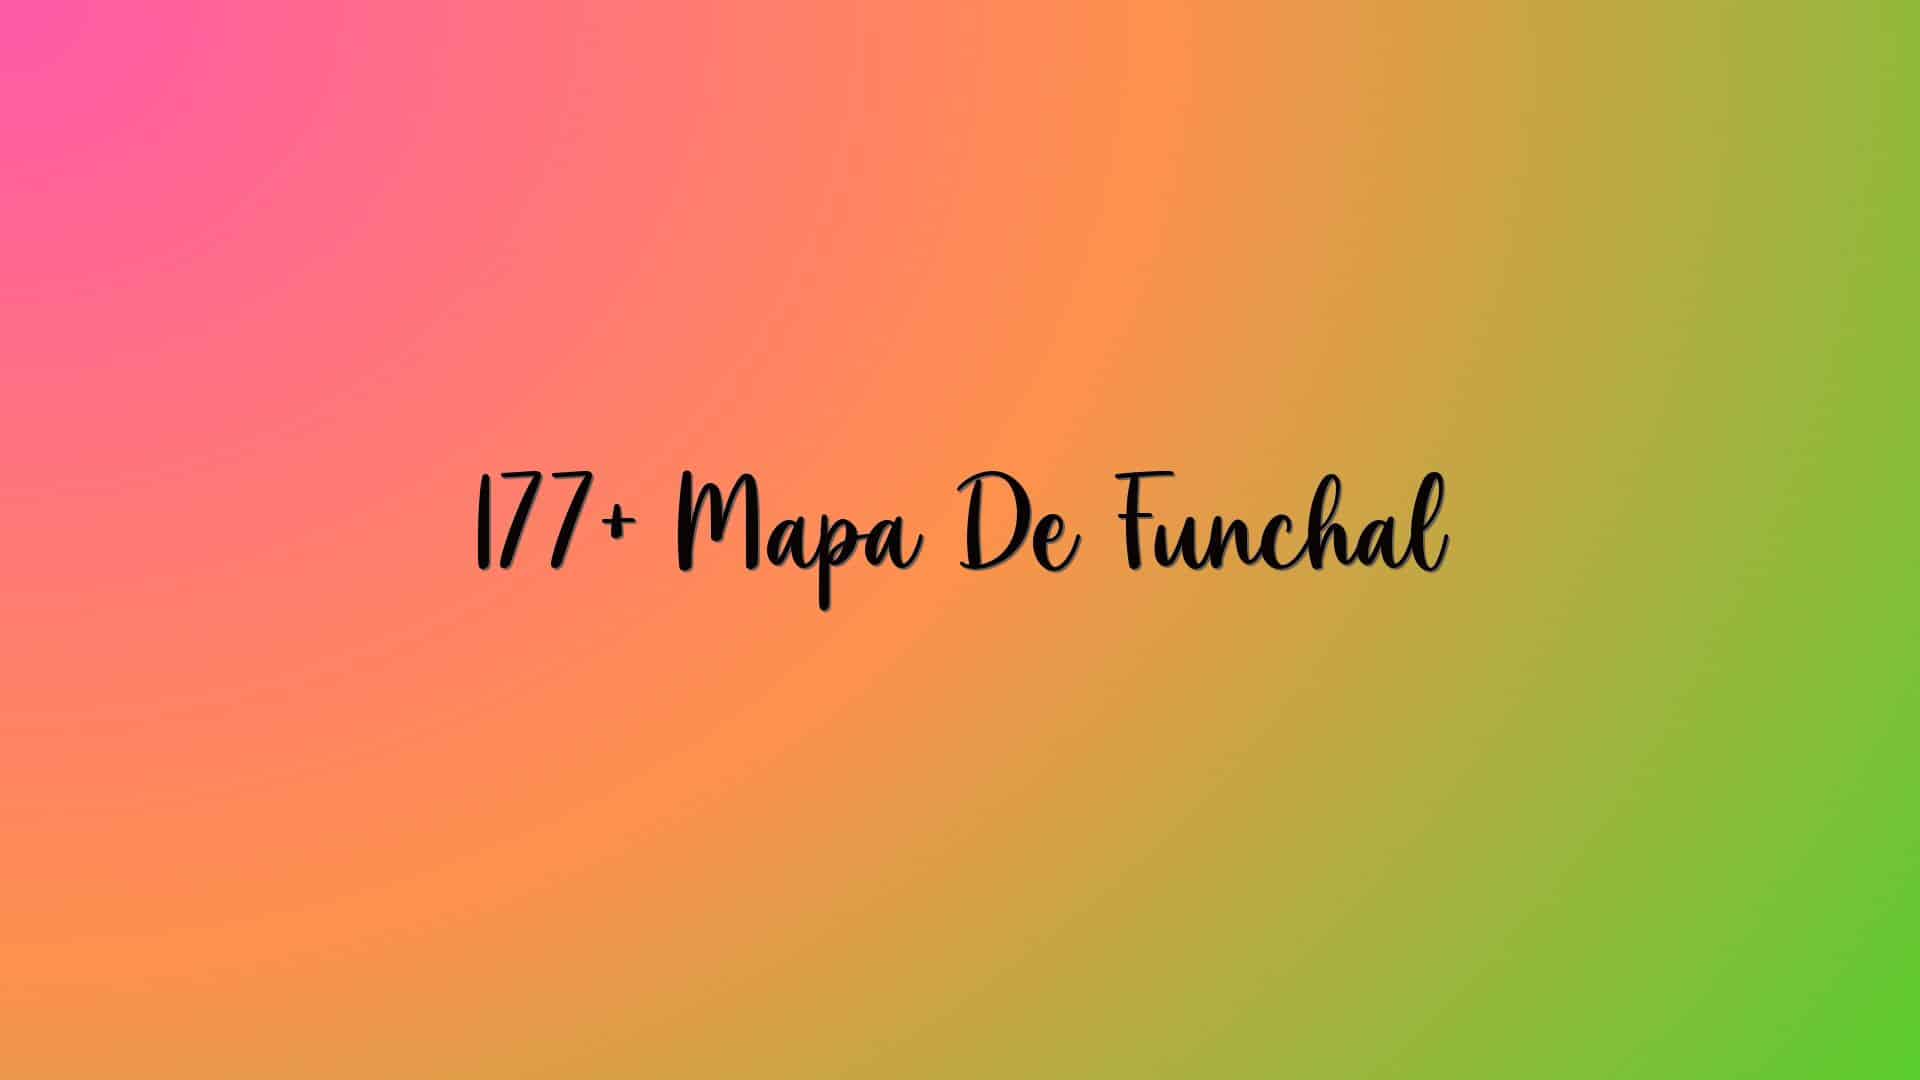 177+ Mapa De Funchal